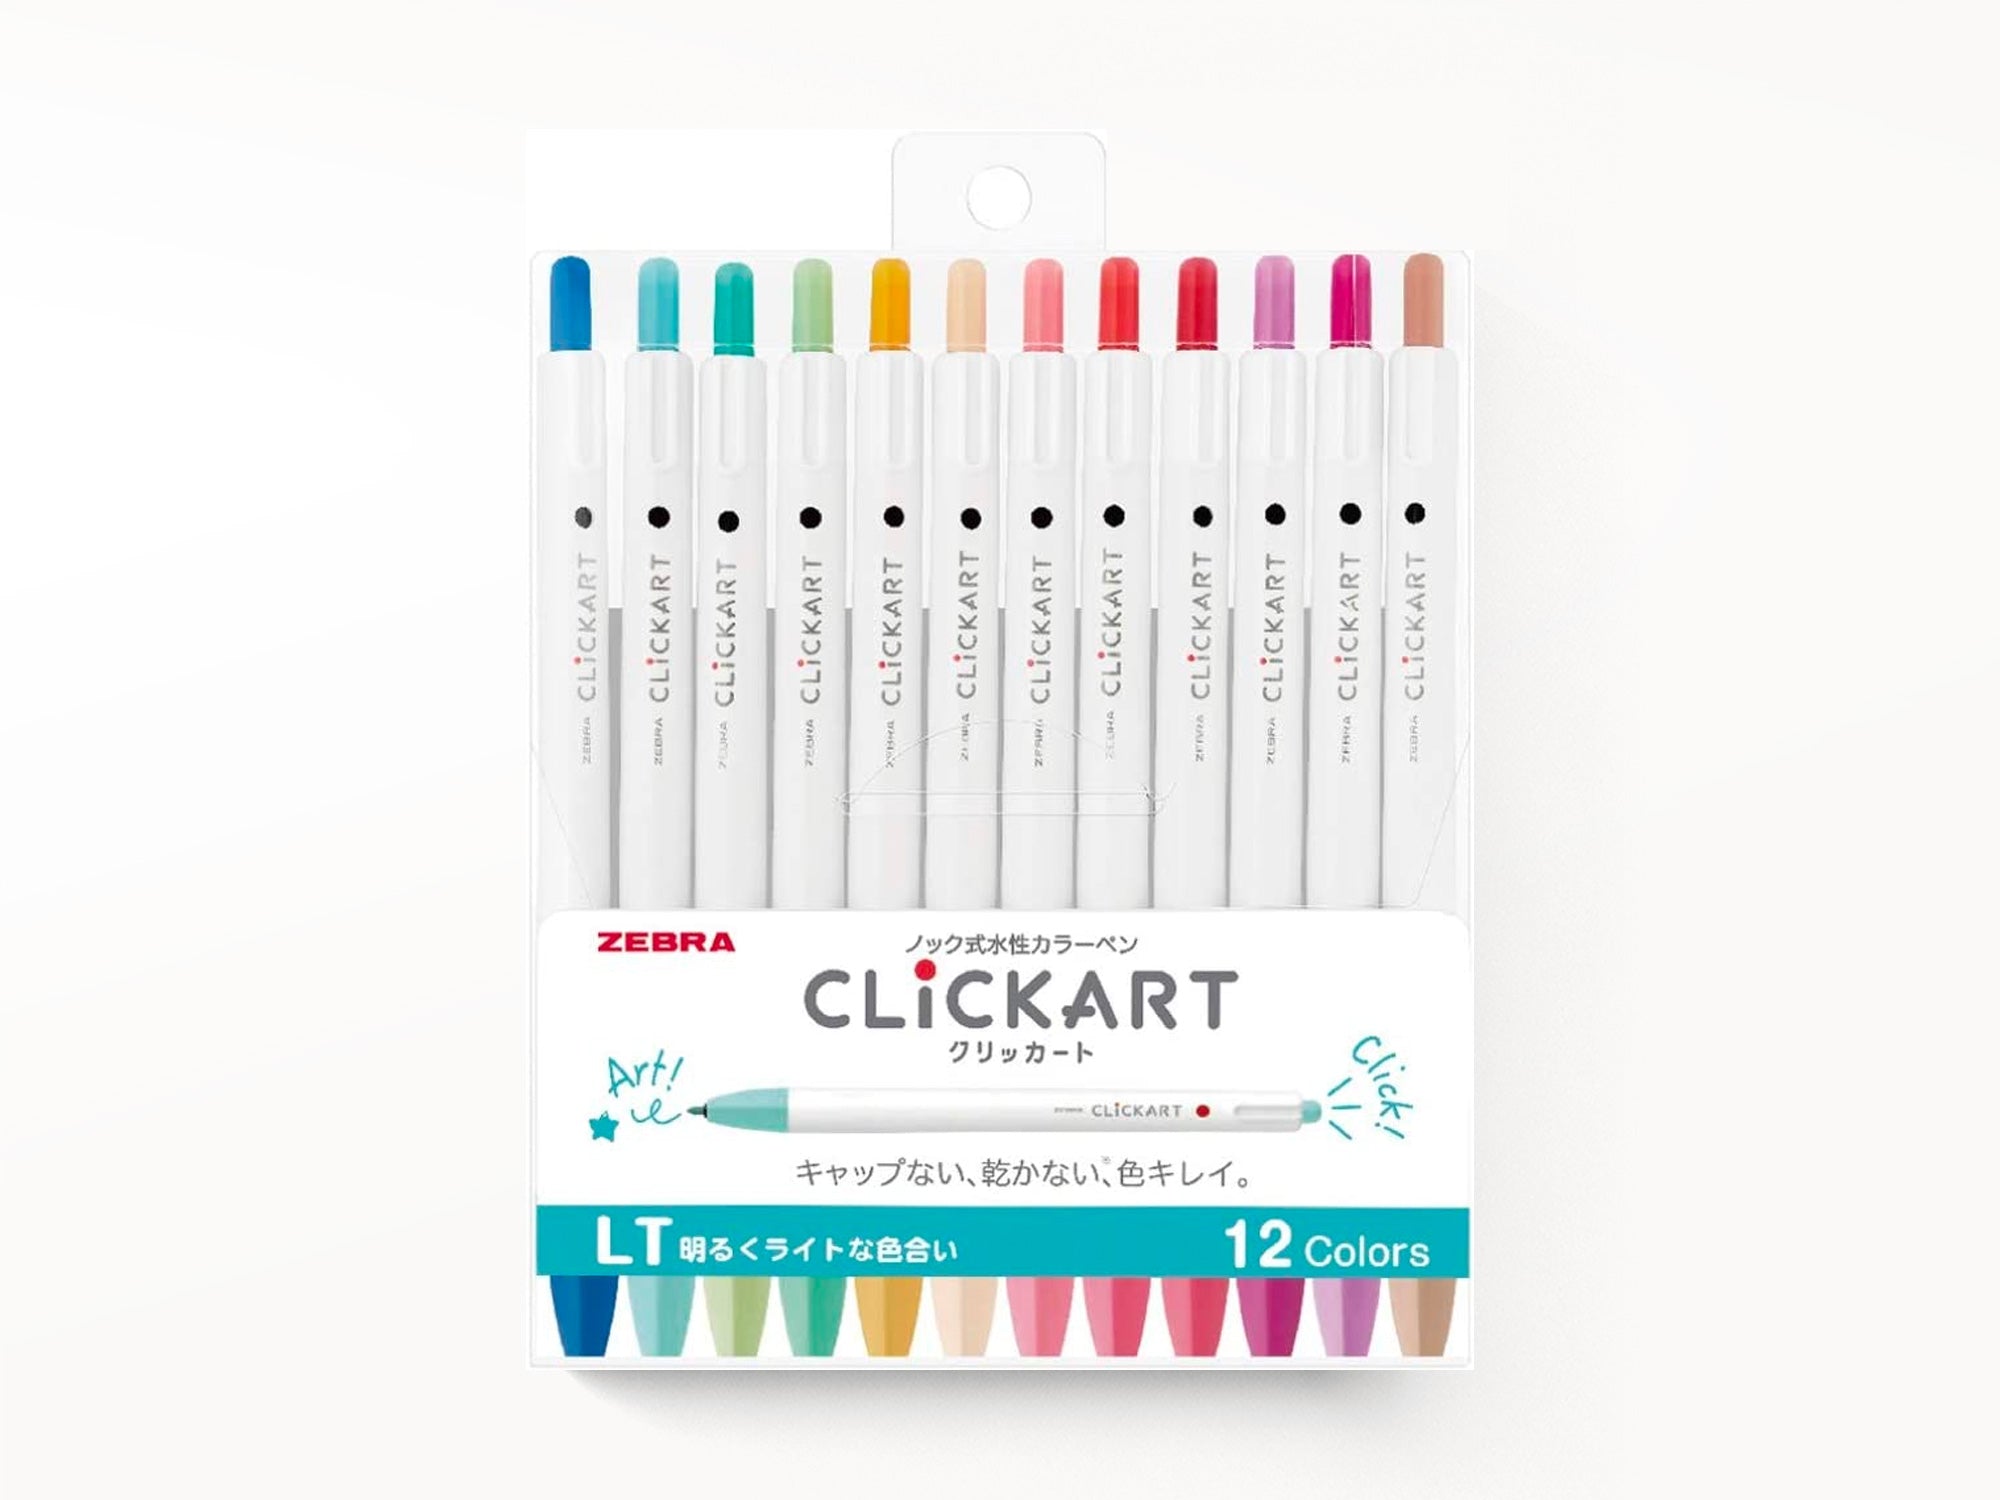 Clickart Retractable Pen Marker - Palette 2